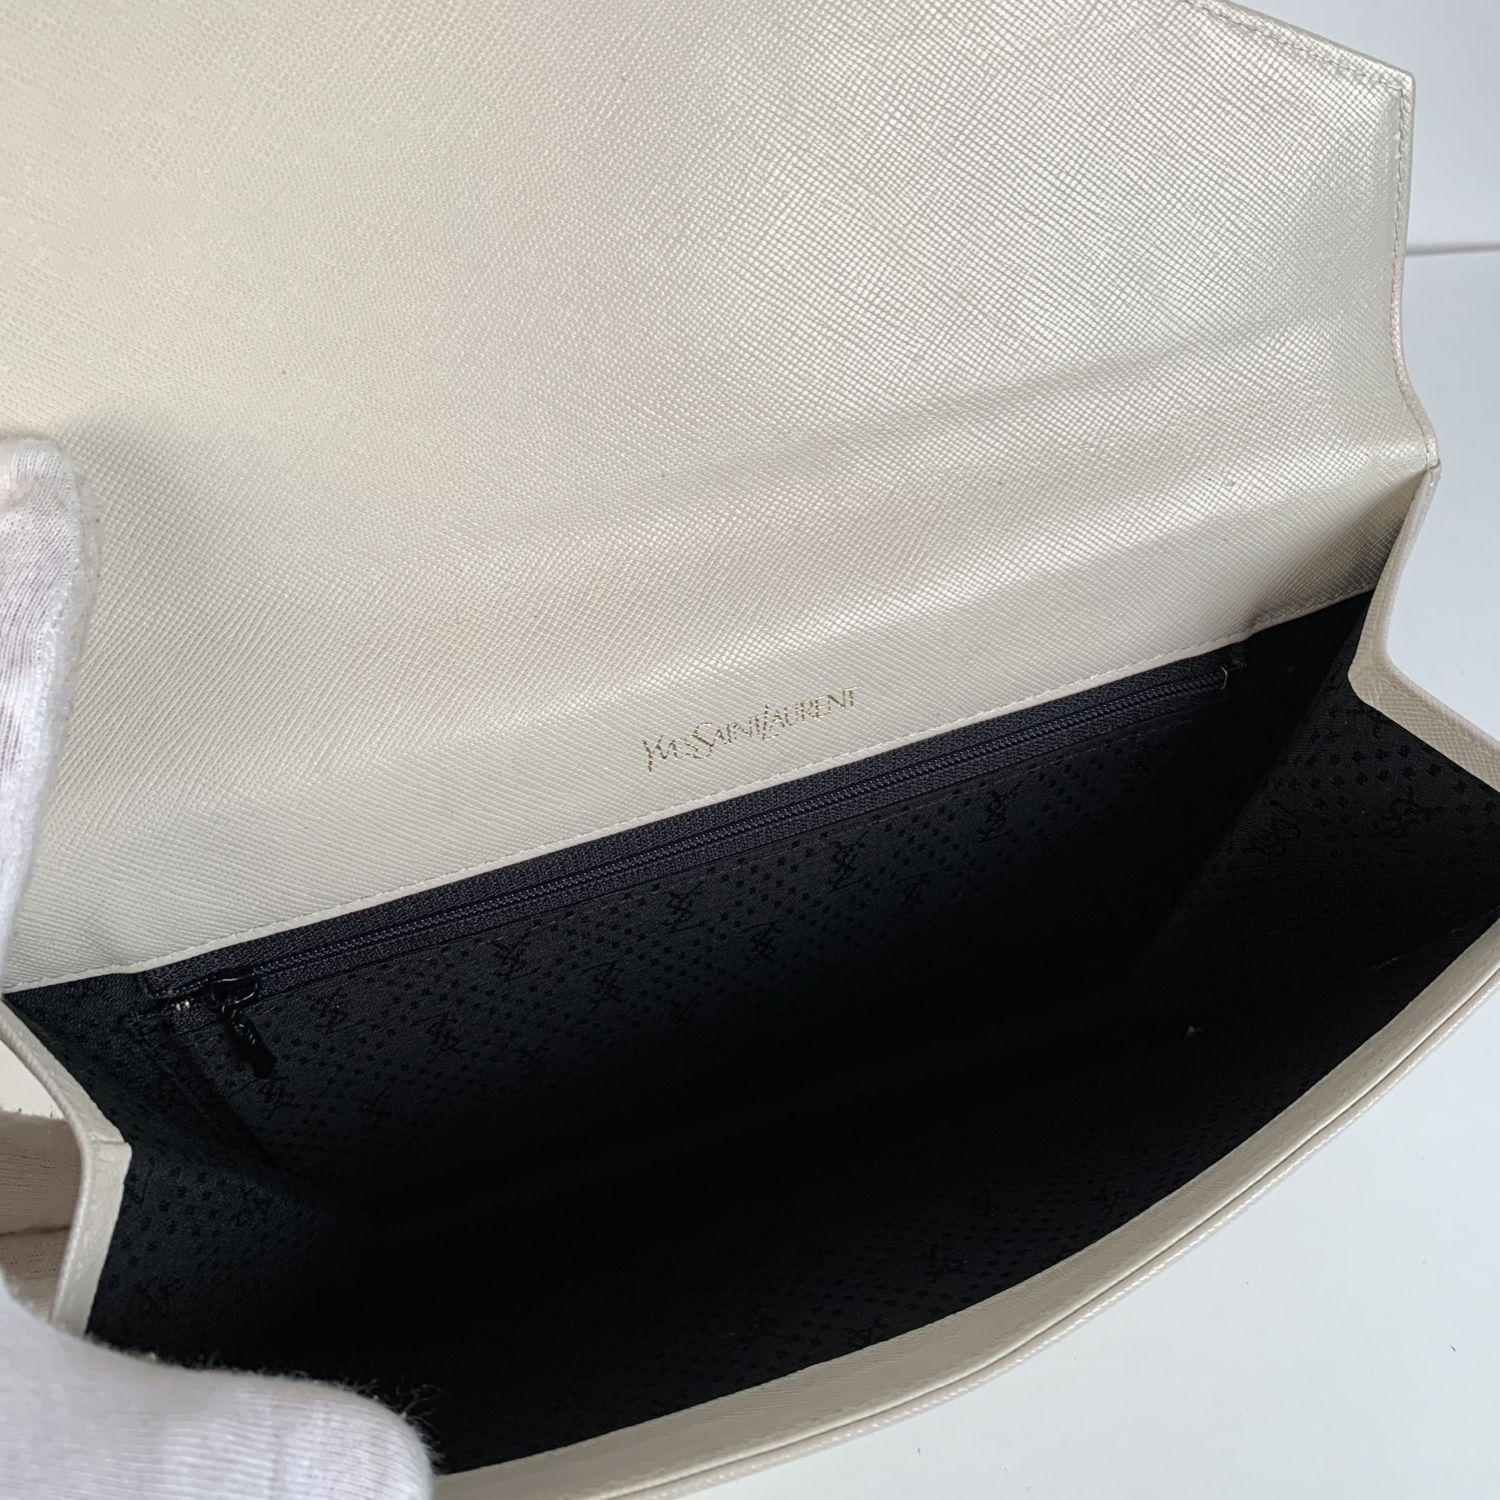 Yves Saint Laurent Vintage White Leather Clutch Bag 1